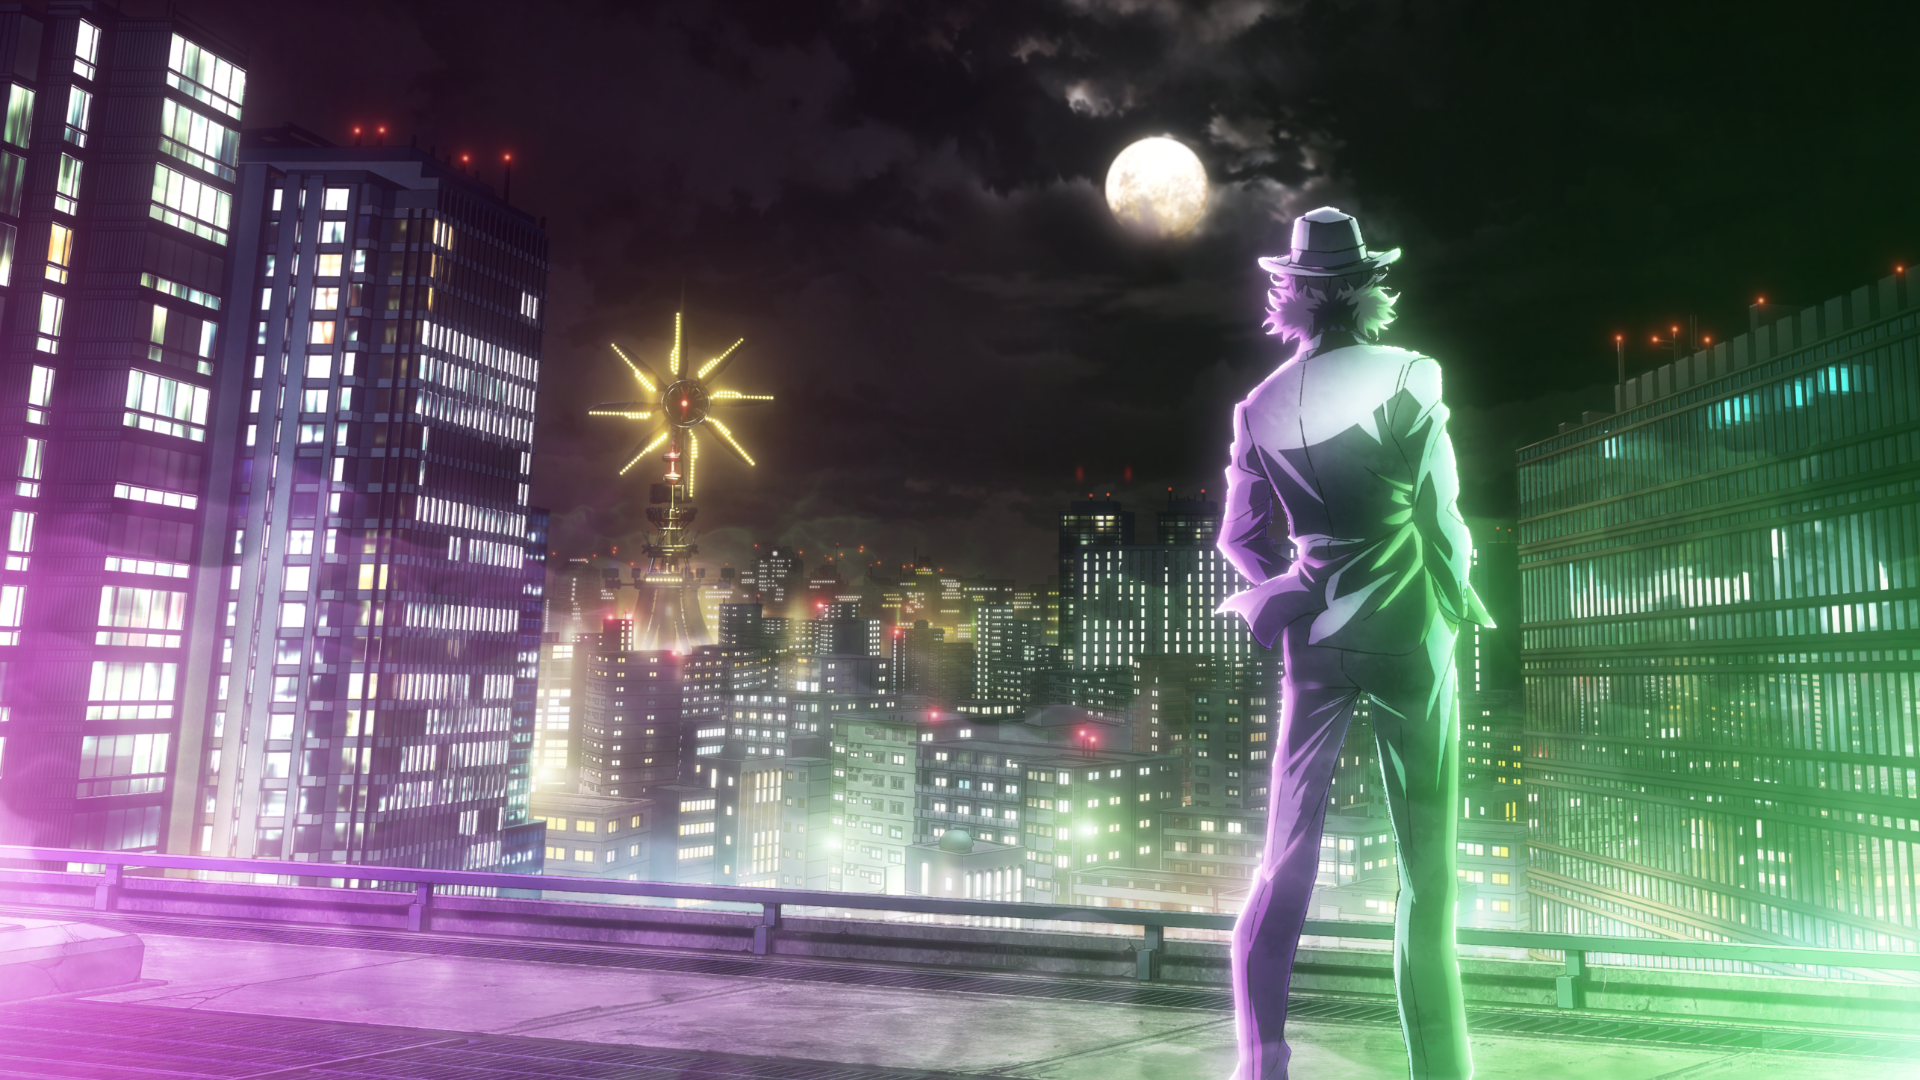 Kamen Rider W Sequel Anime Fuuto PI Posts Teaser Visuals Online - News -  Anime News Network